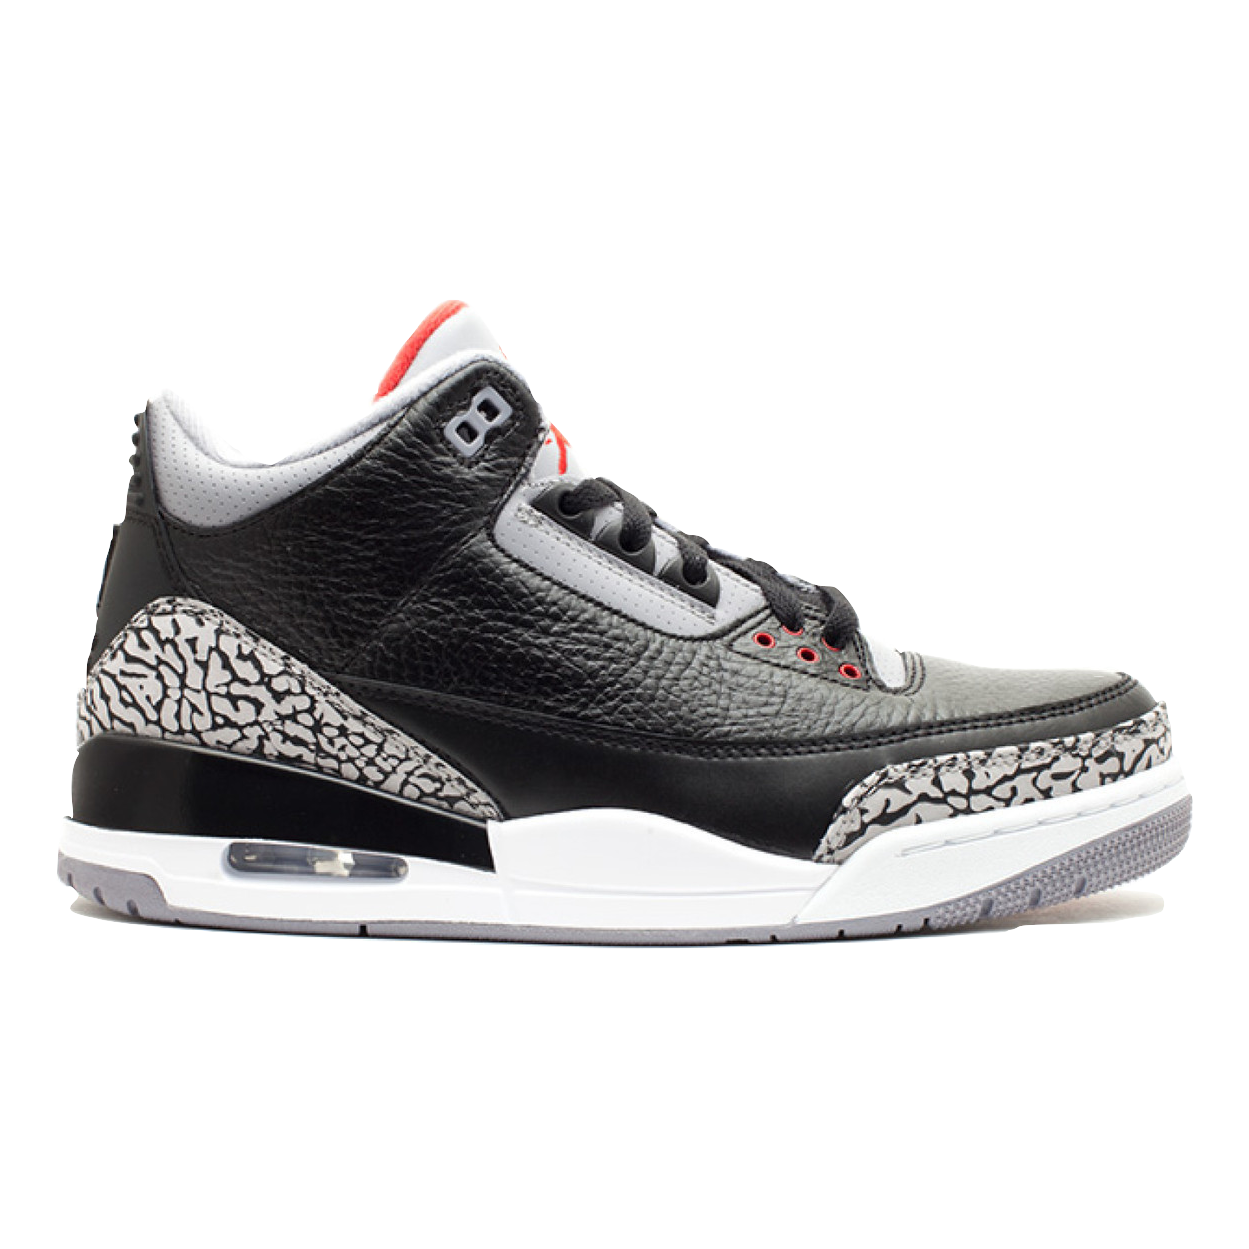 Air Jordan 3 Retro - Black Cement (2011)